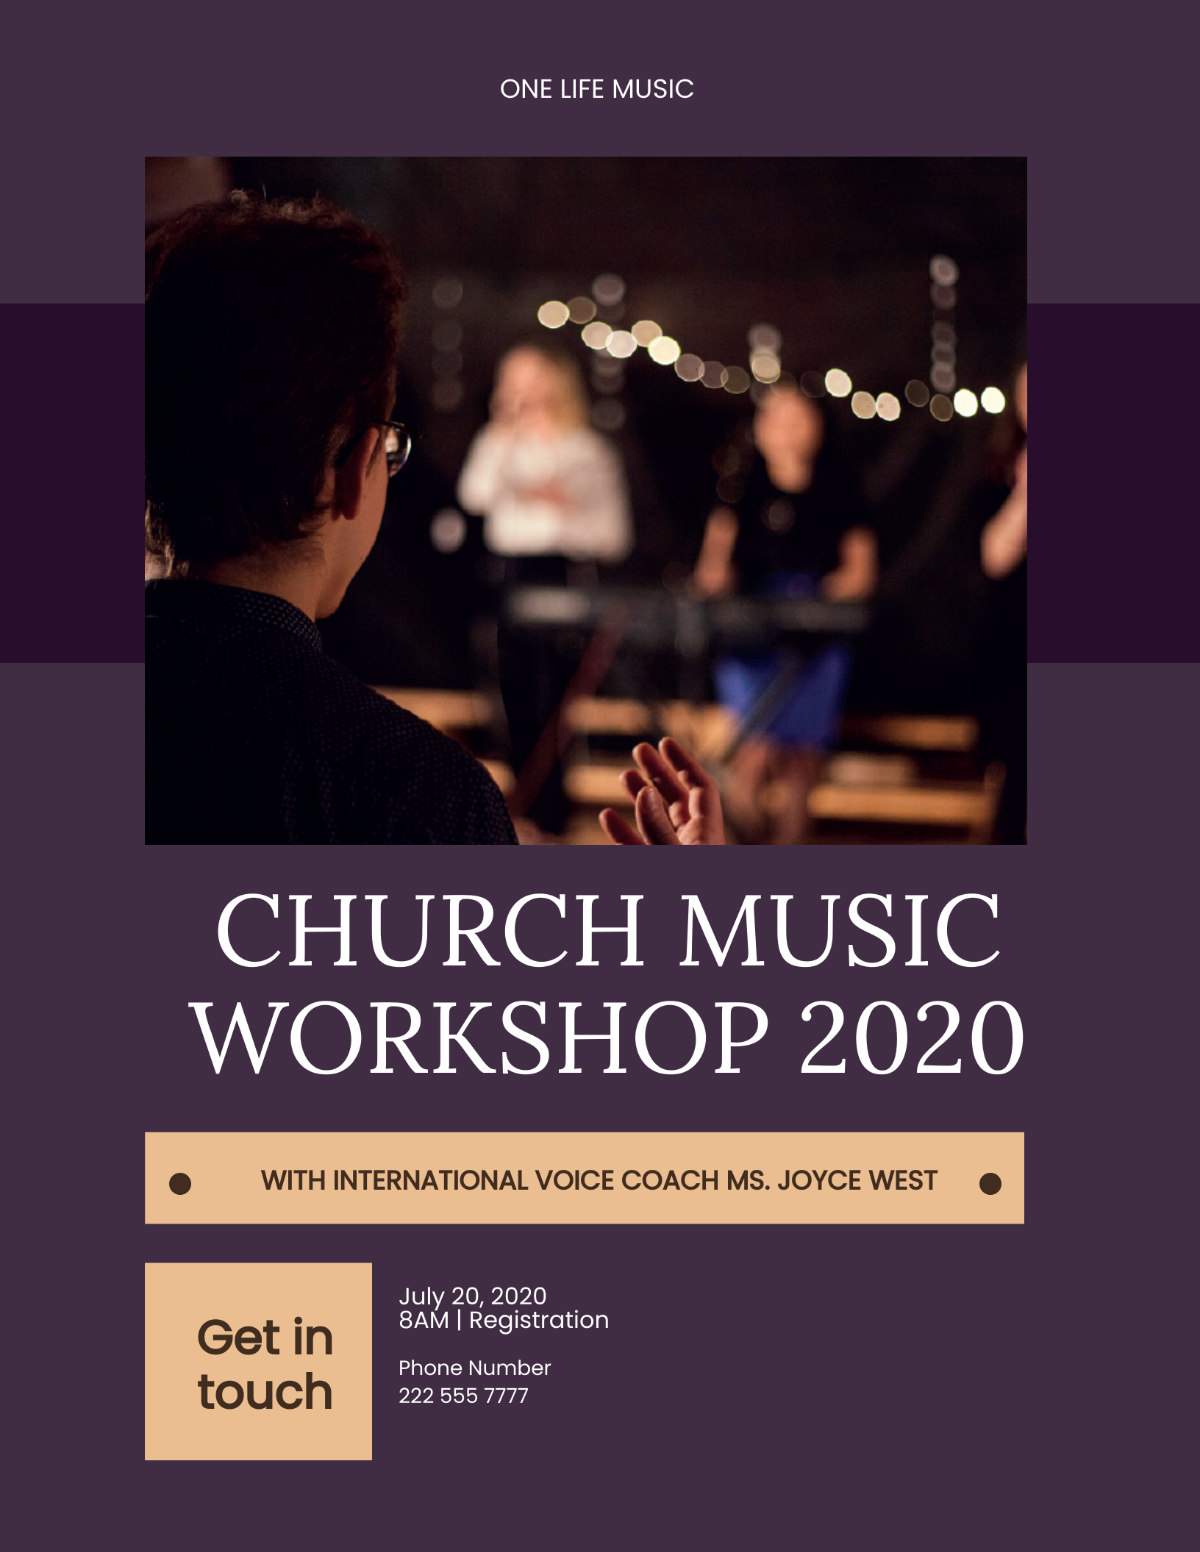 Church Music Workshop Flyer Template